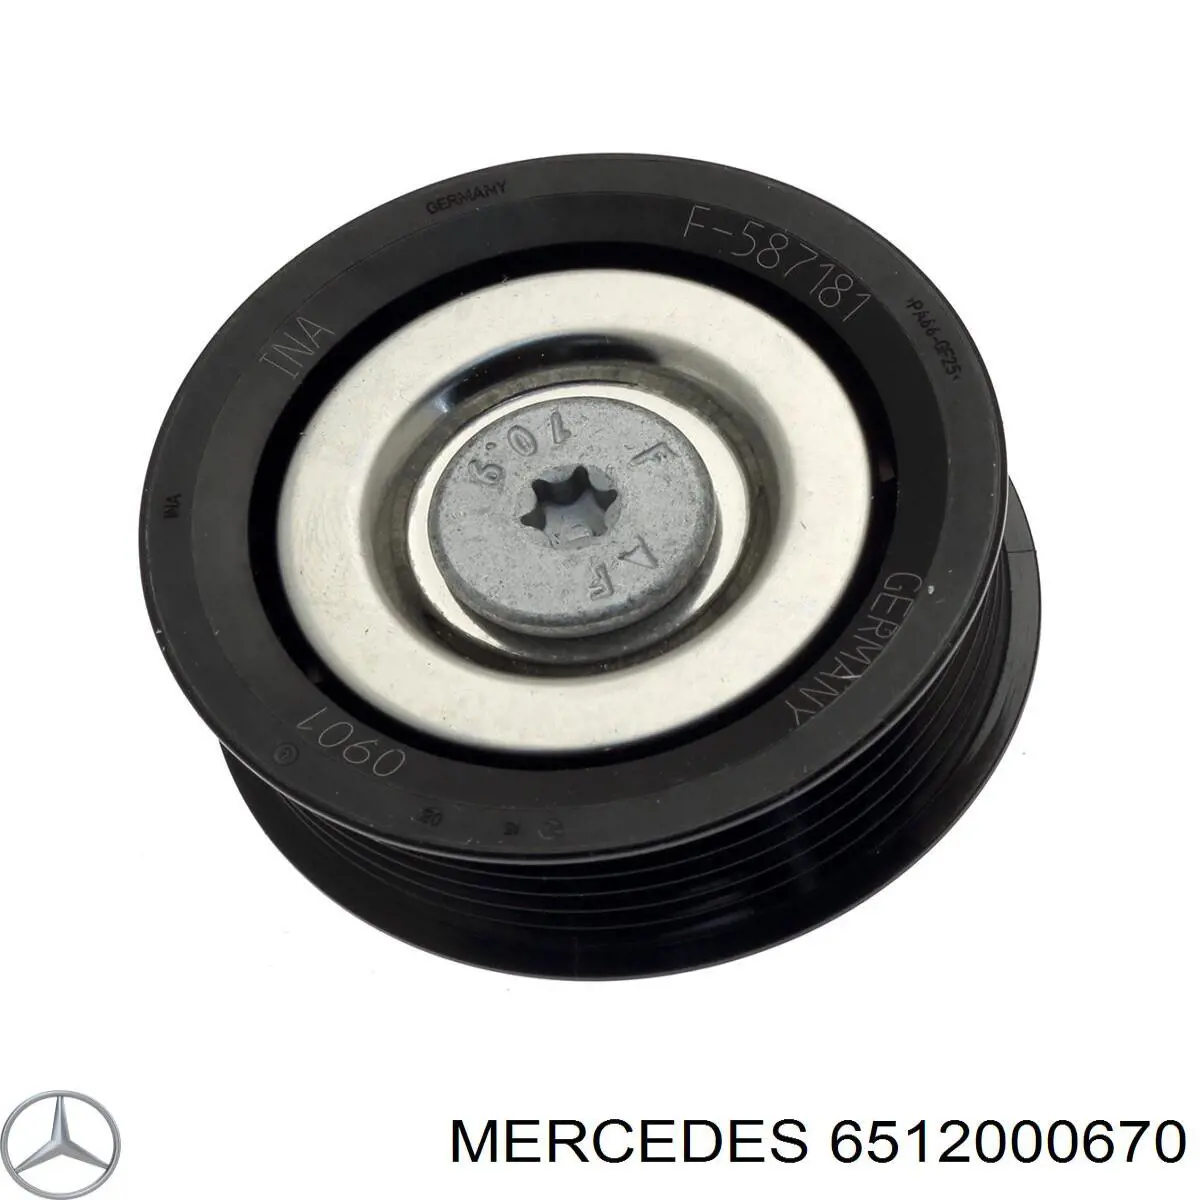 6512000670 Mercedes polea inversión / guía, correa poli v